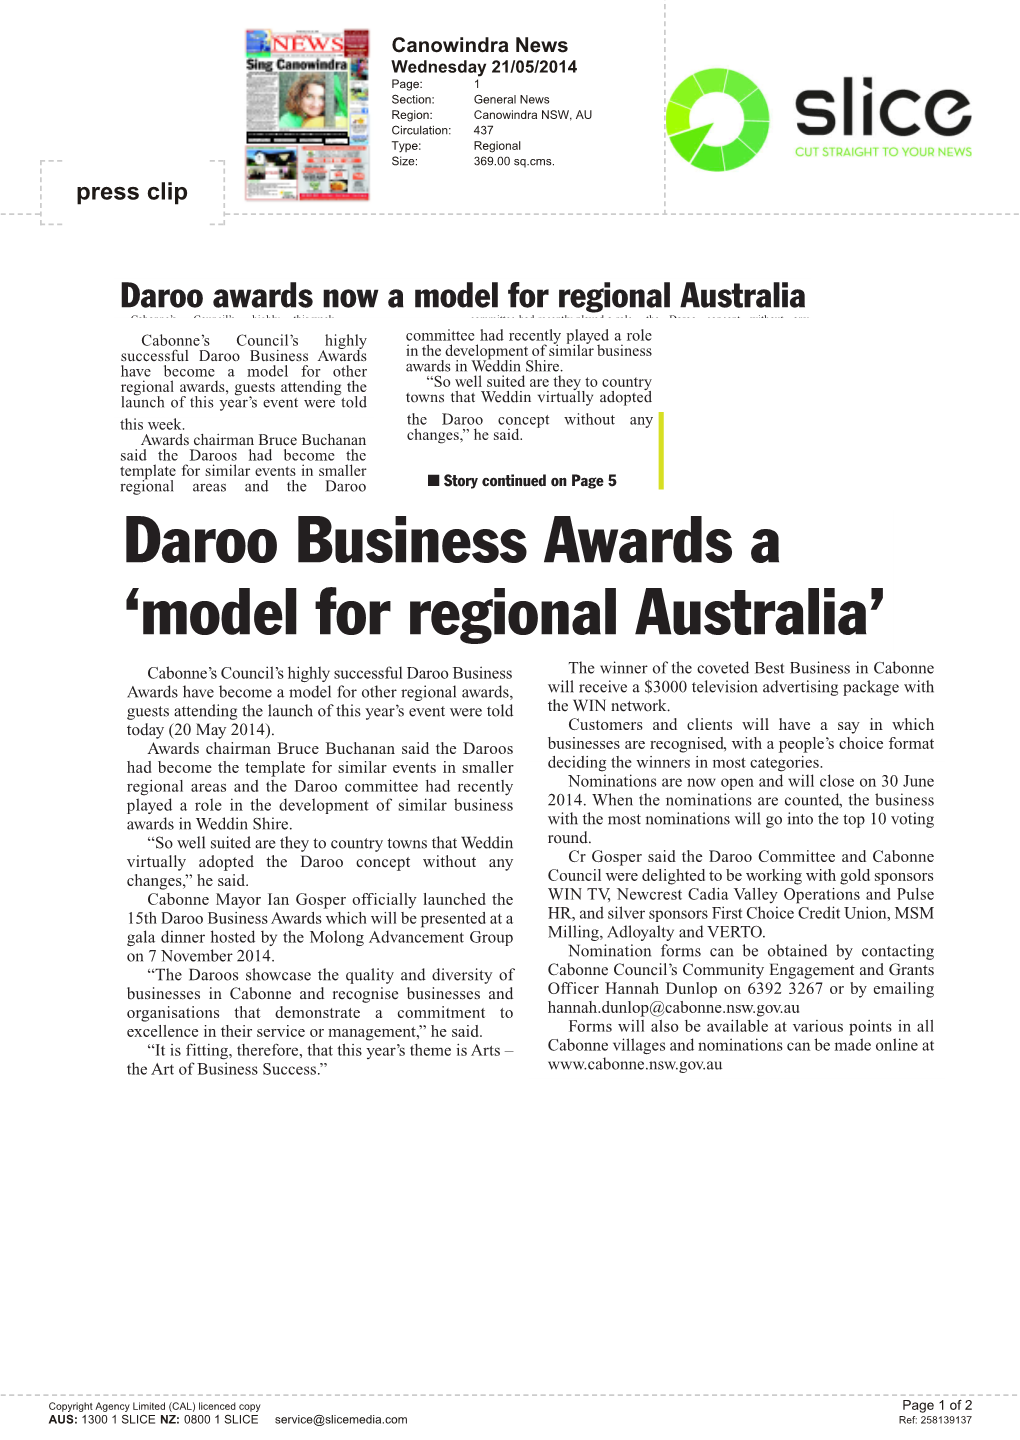 Daroo Business Awards a ‘Model for Regional Australia’